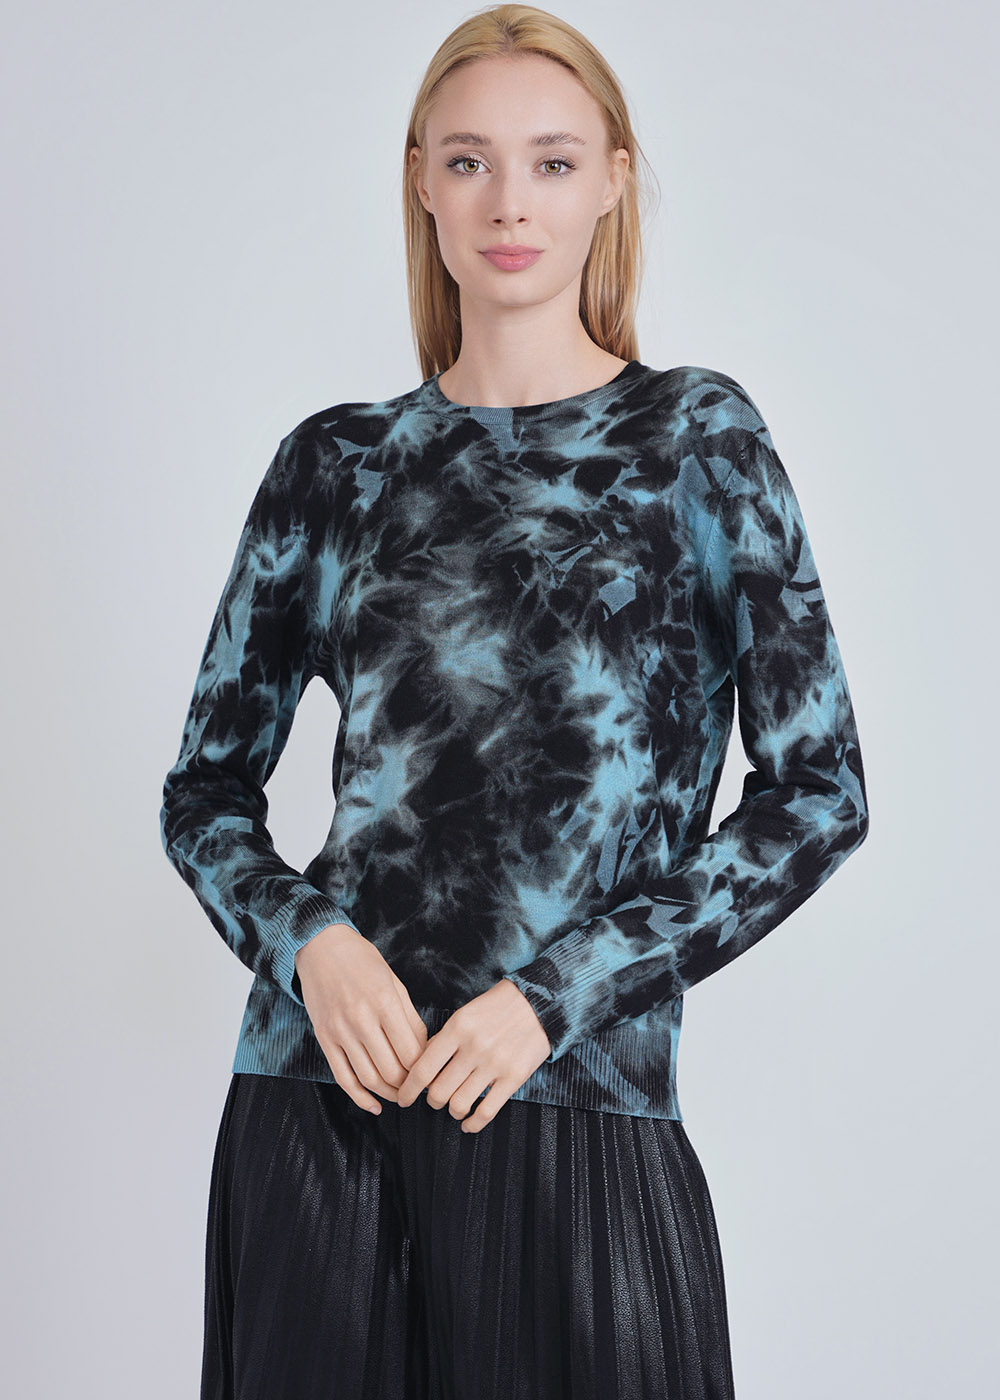 Black & Blue Tie Dye Fusion Sweater